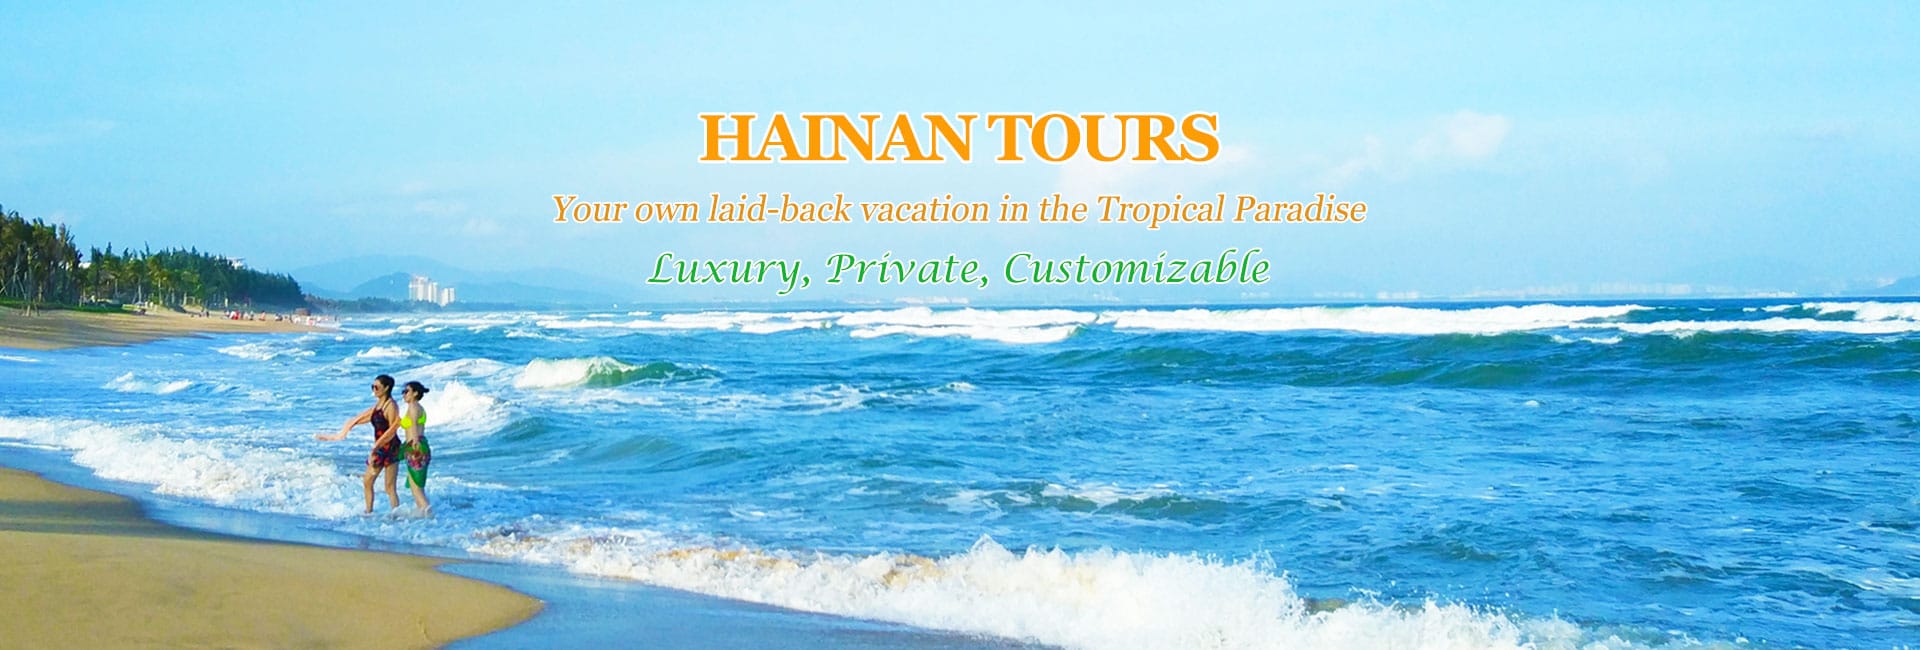 Hainan Tours